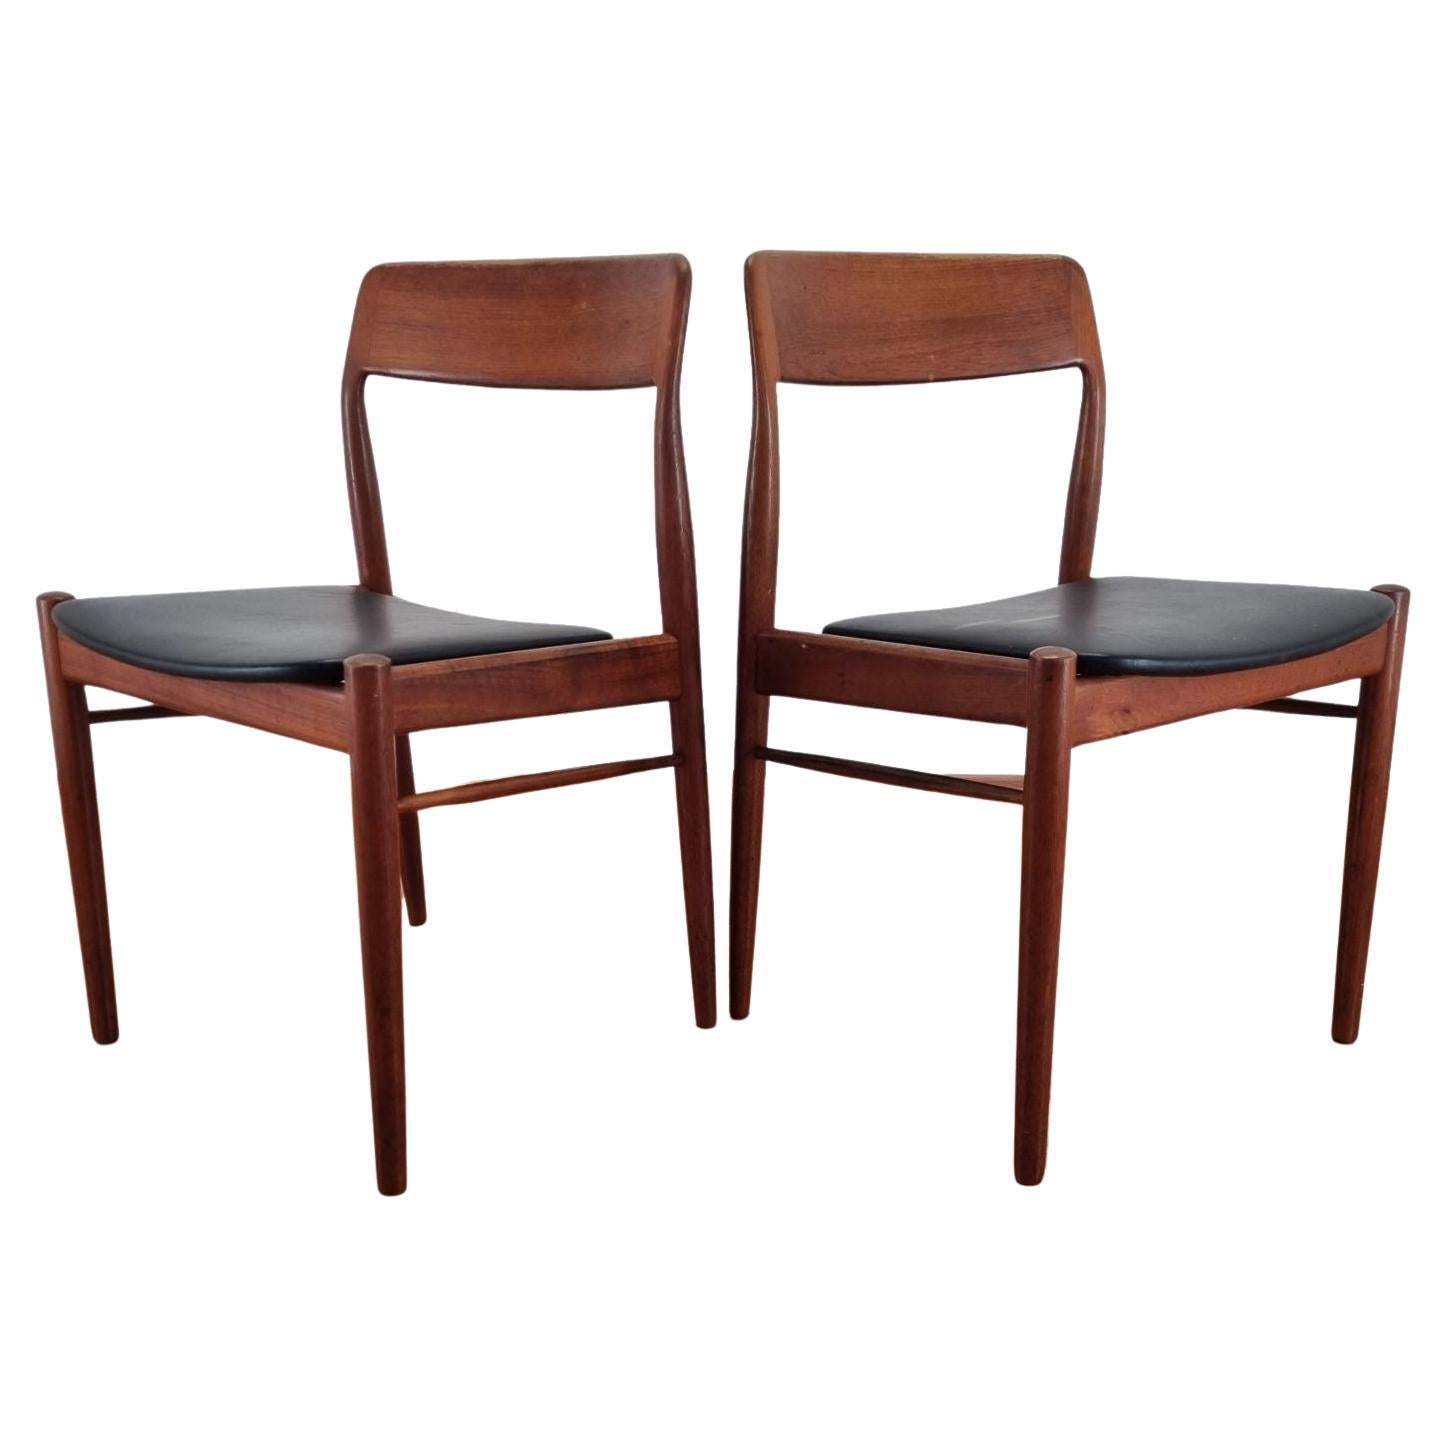 Scandinavian Modern Teak Dining Chairs, Design By Niels Otto Möller, Denmark 60s For Sale